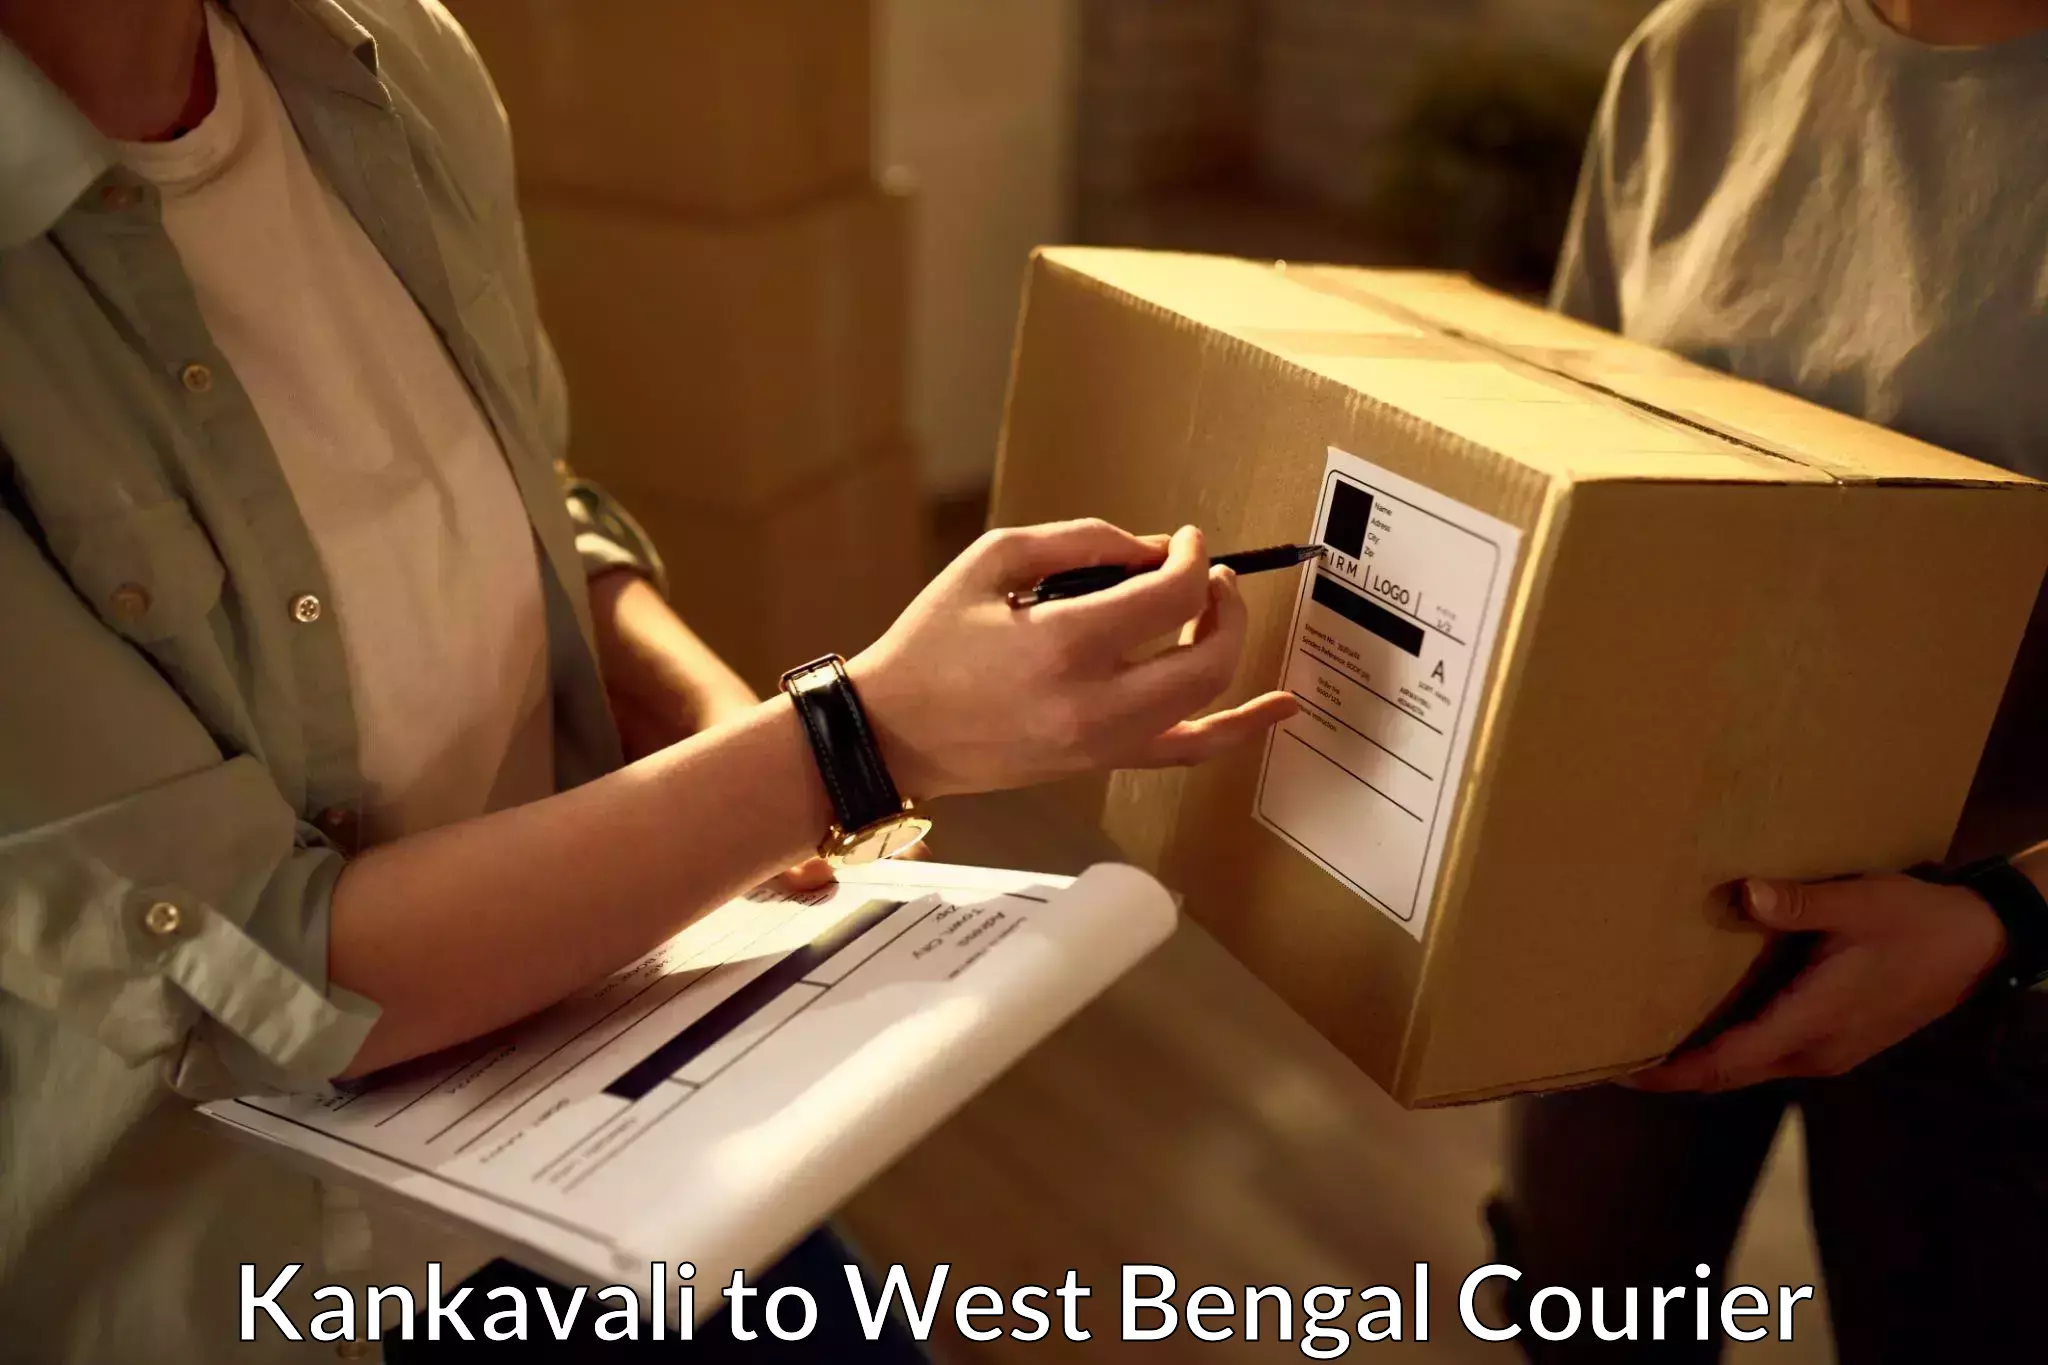 Global logistics network Kankavali to West Bengal